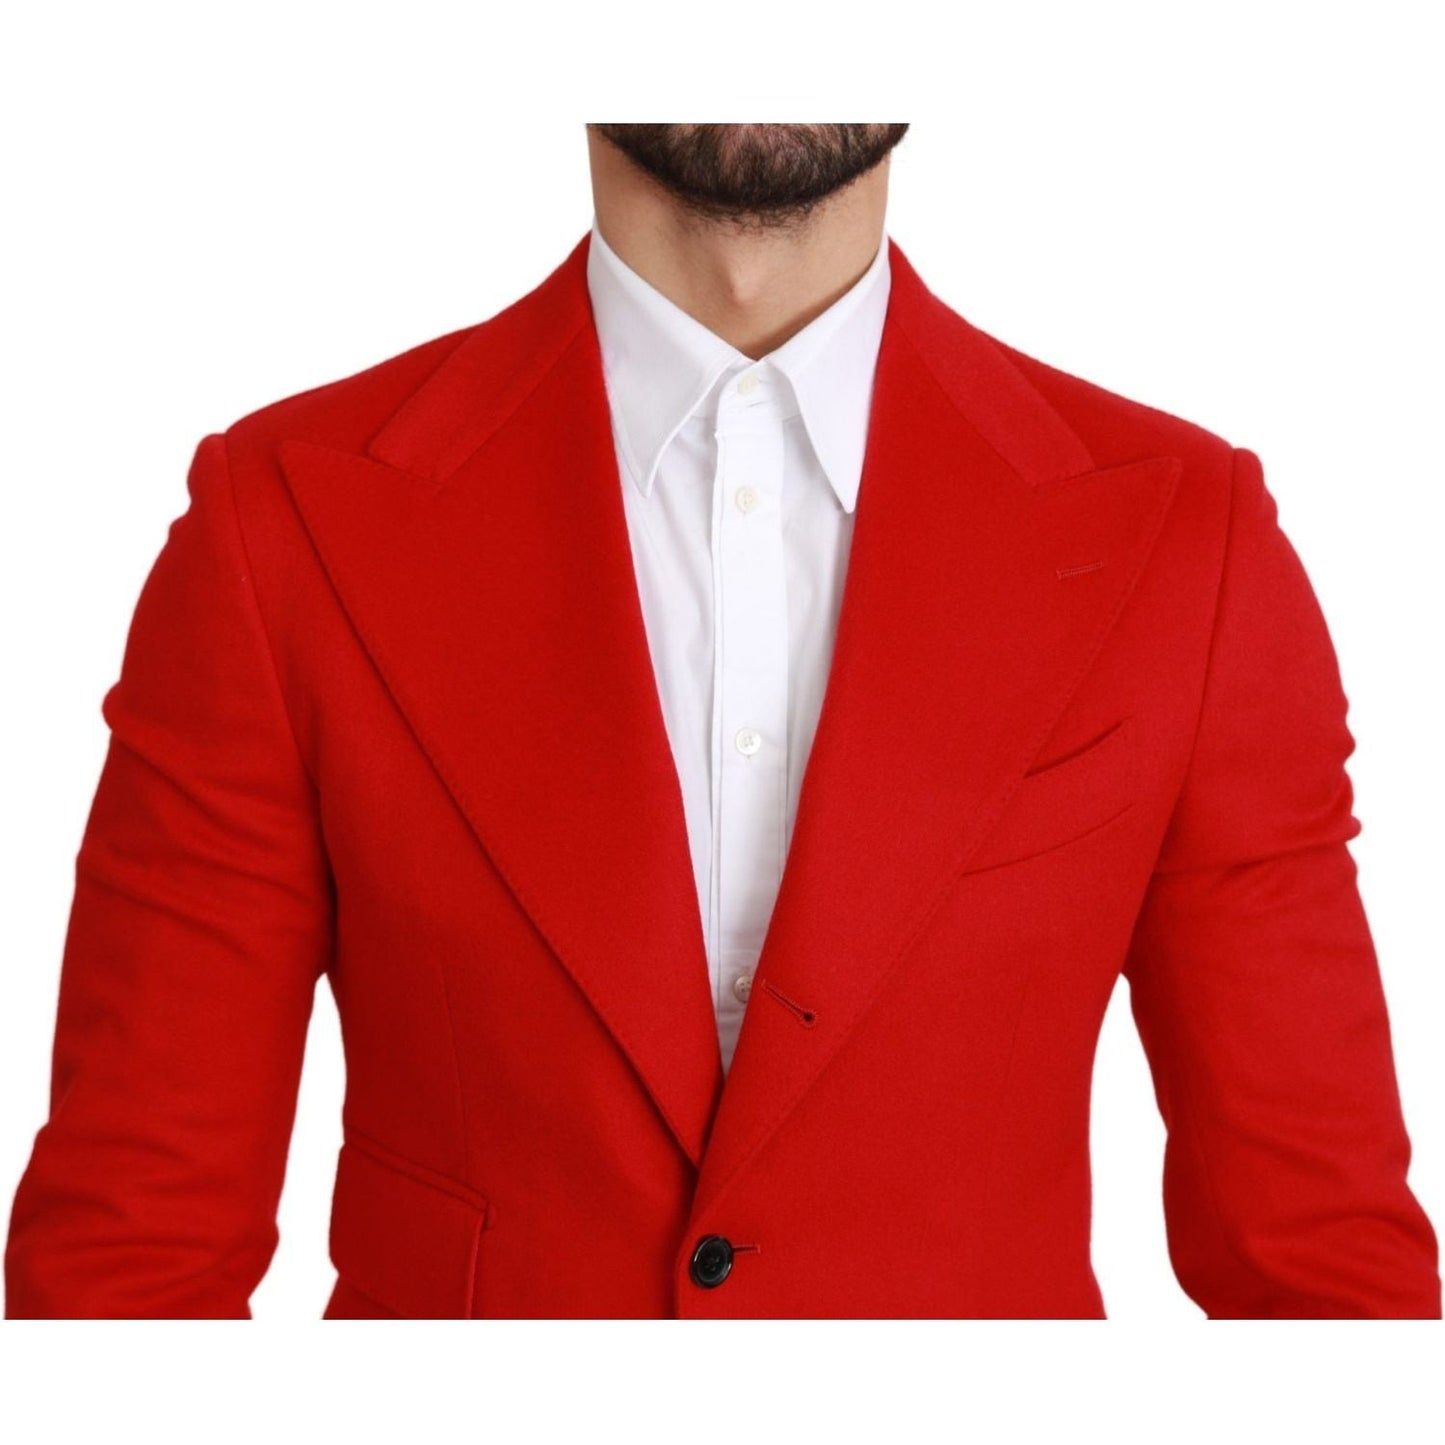 Dolce & Gabbana Elegant Red Cashmere Slim Fit Blazer red-cashmere-slim-fit-coat-jacket-blazer IMG_1217-scaled-191e0197-213.jpg